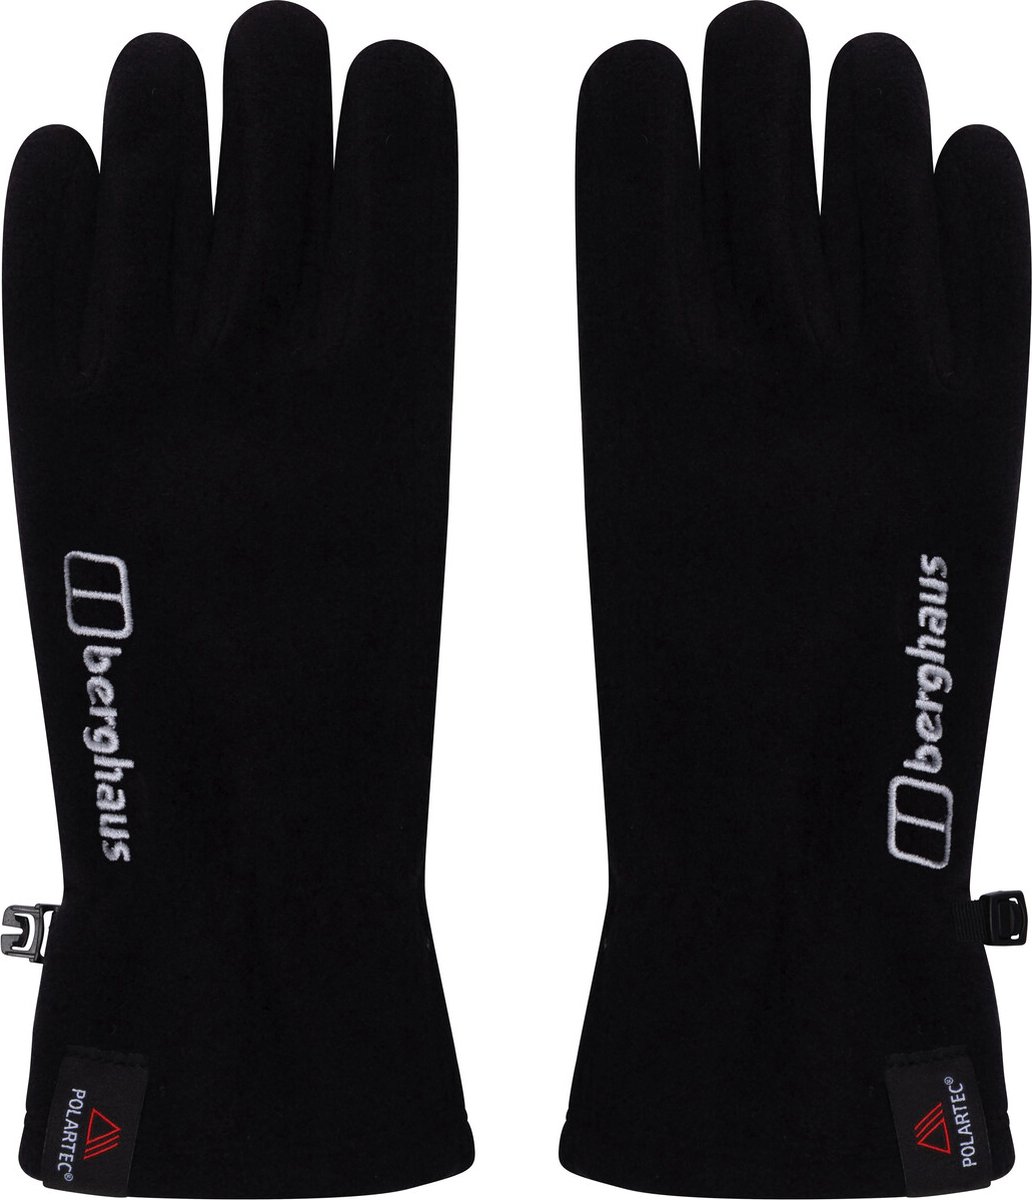 Berghaus PRISM PolarTec Handschoenen, zwart